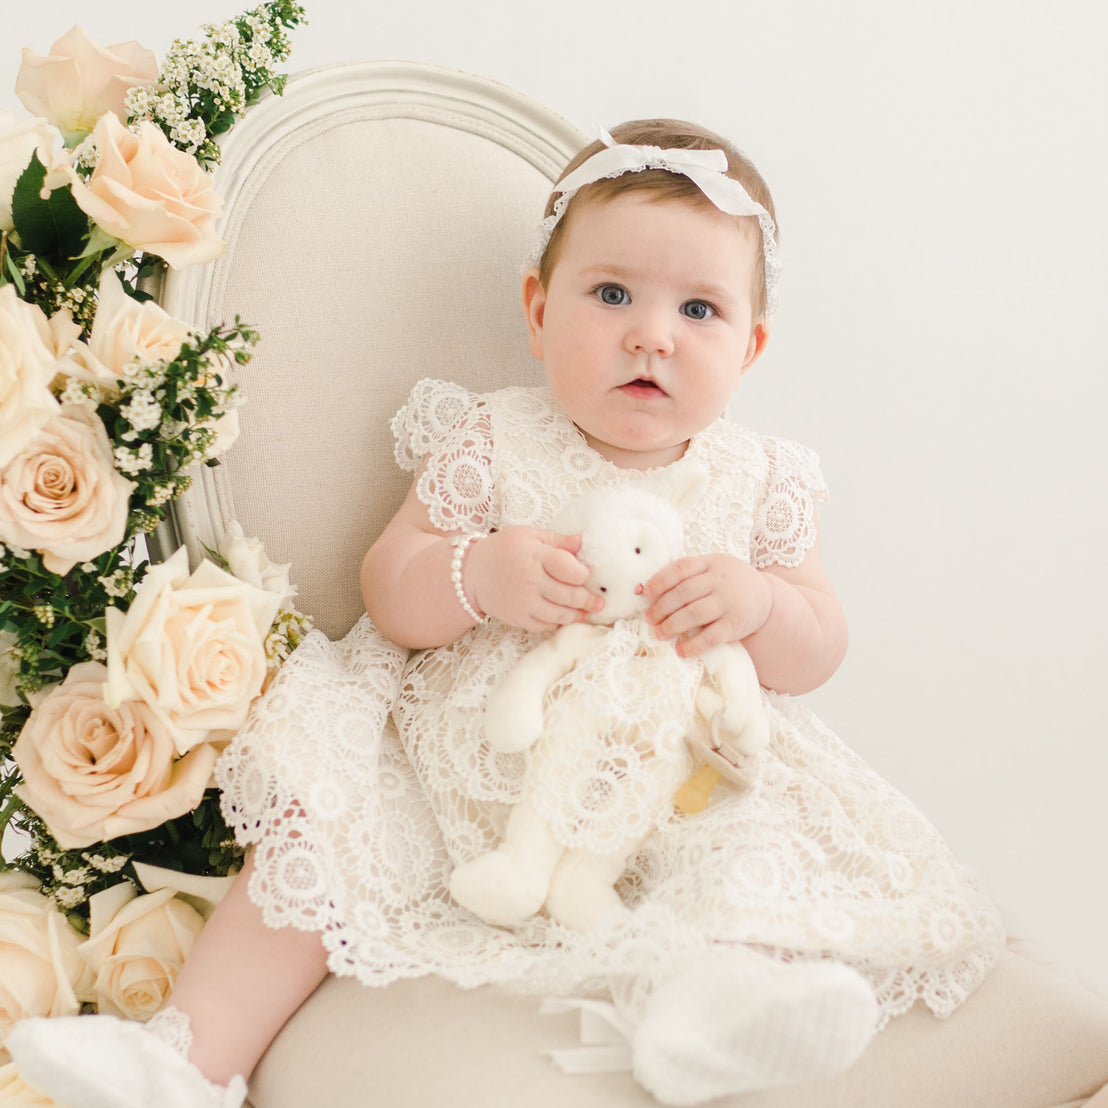 Baby girl holding plush lamb toy in her Poppy blessing dress. 